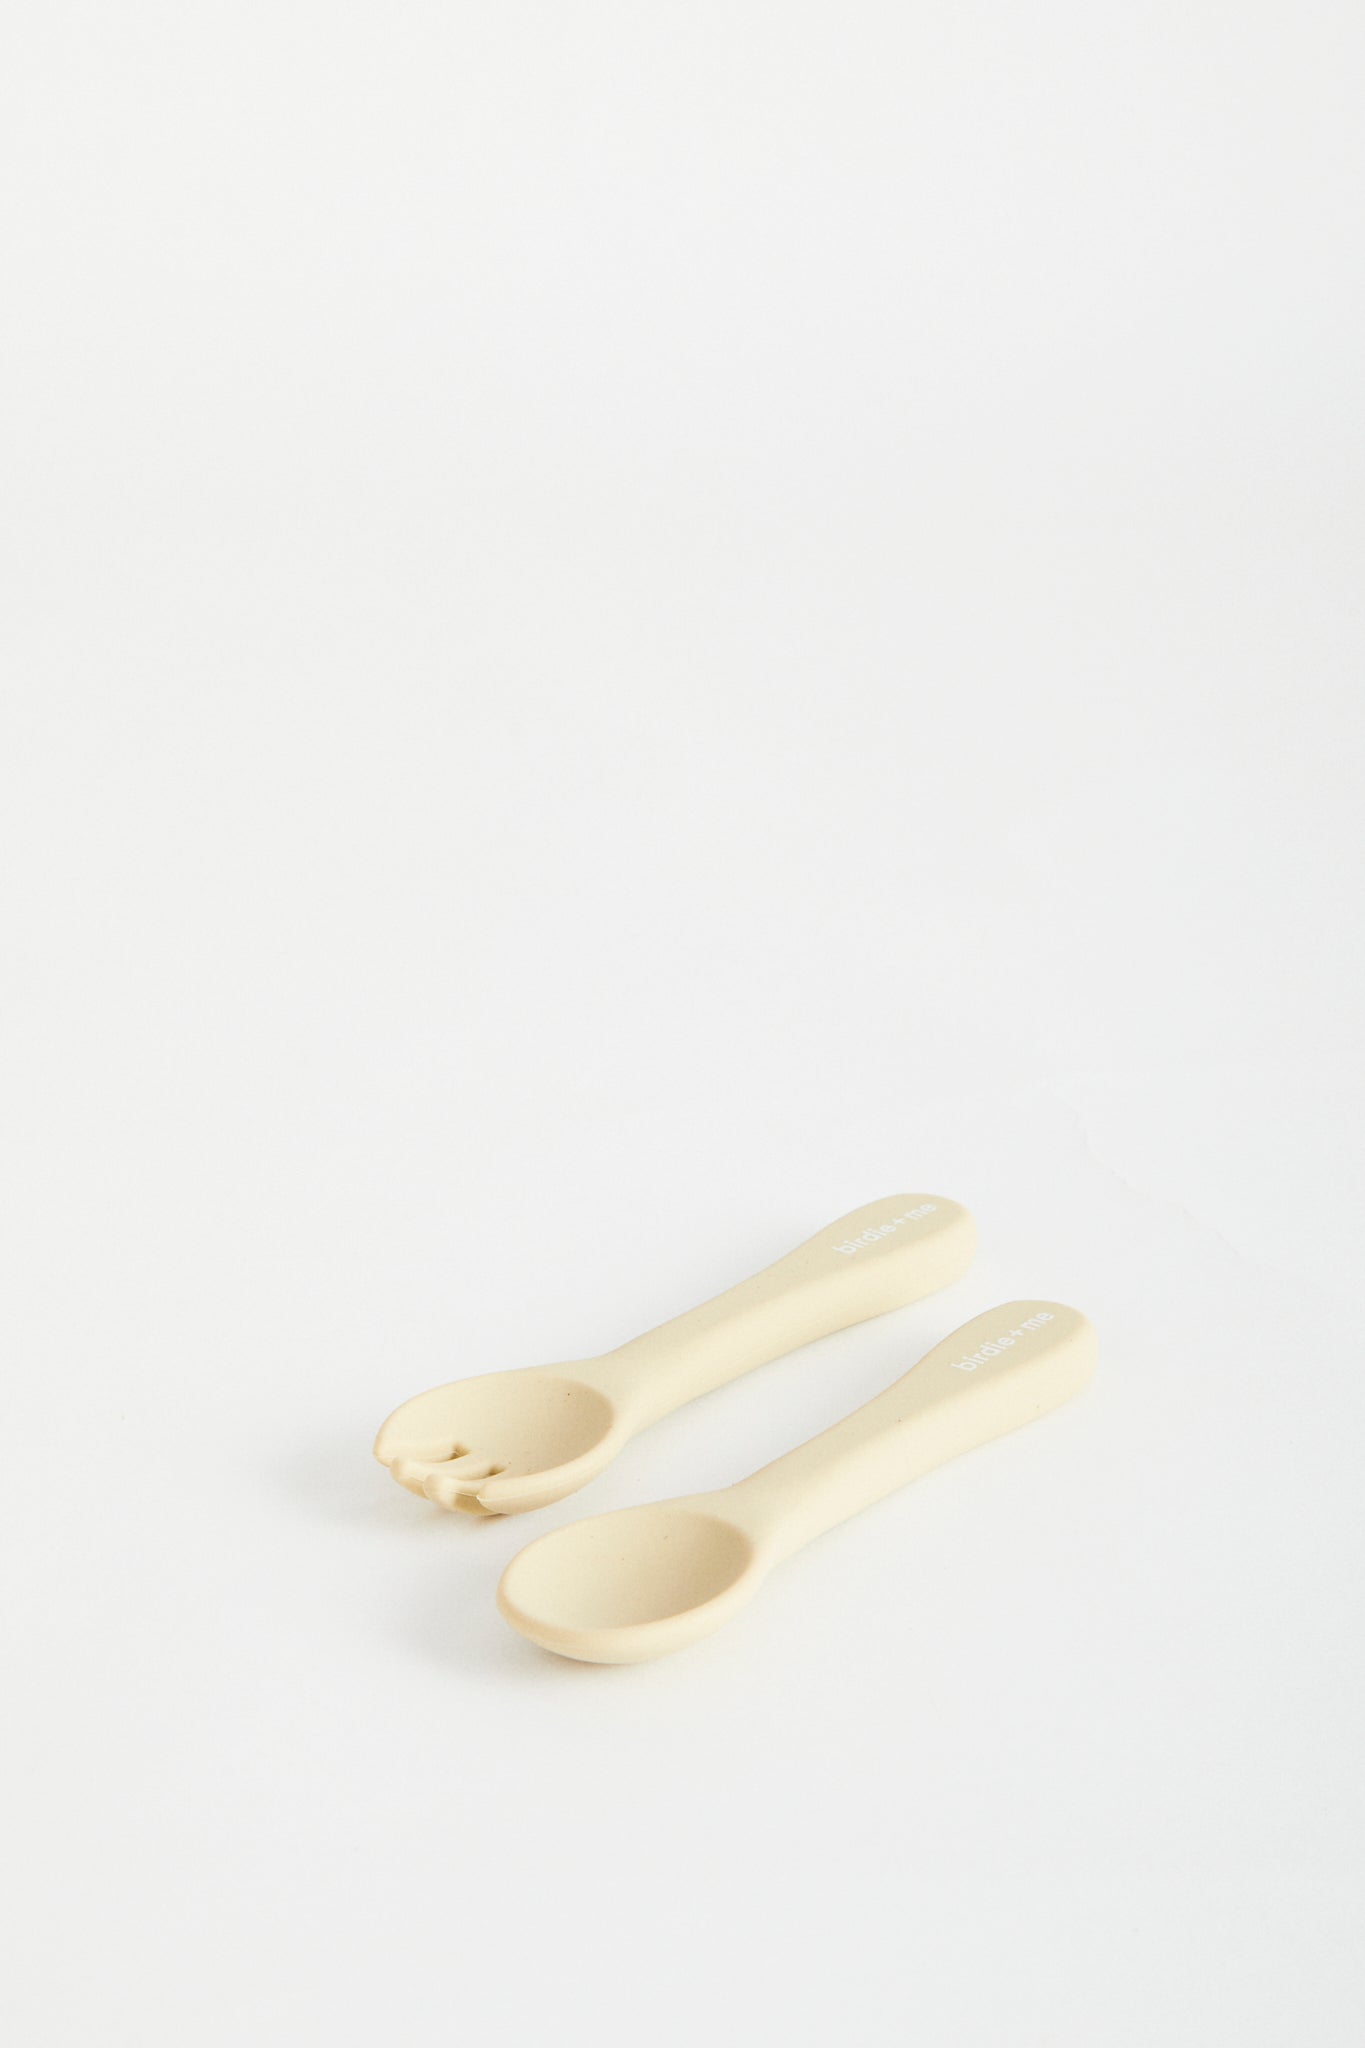 Silicon spoon & fork set in Honey, birdie + me logo on handle.